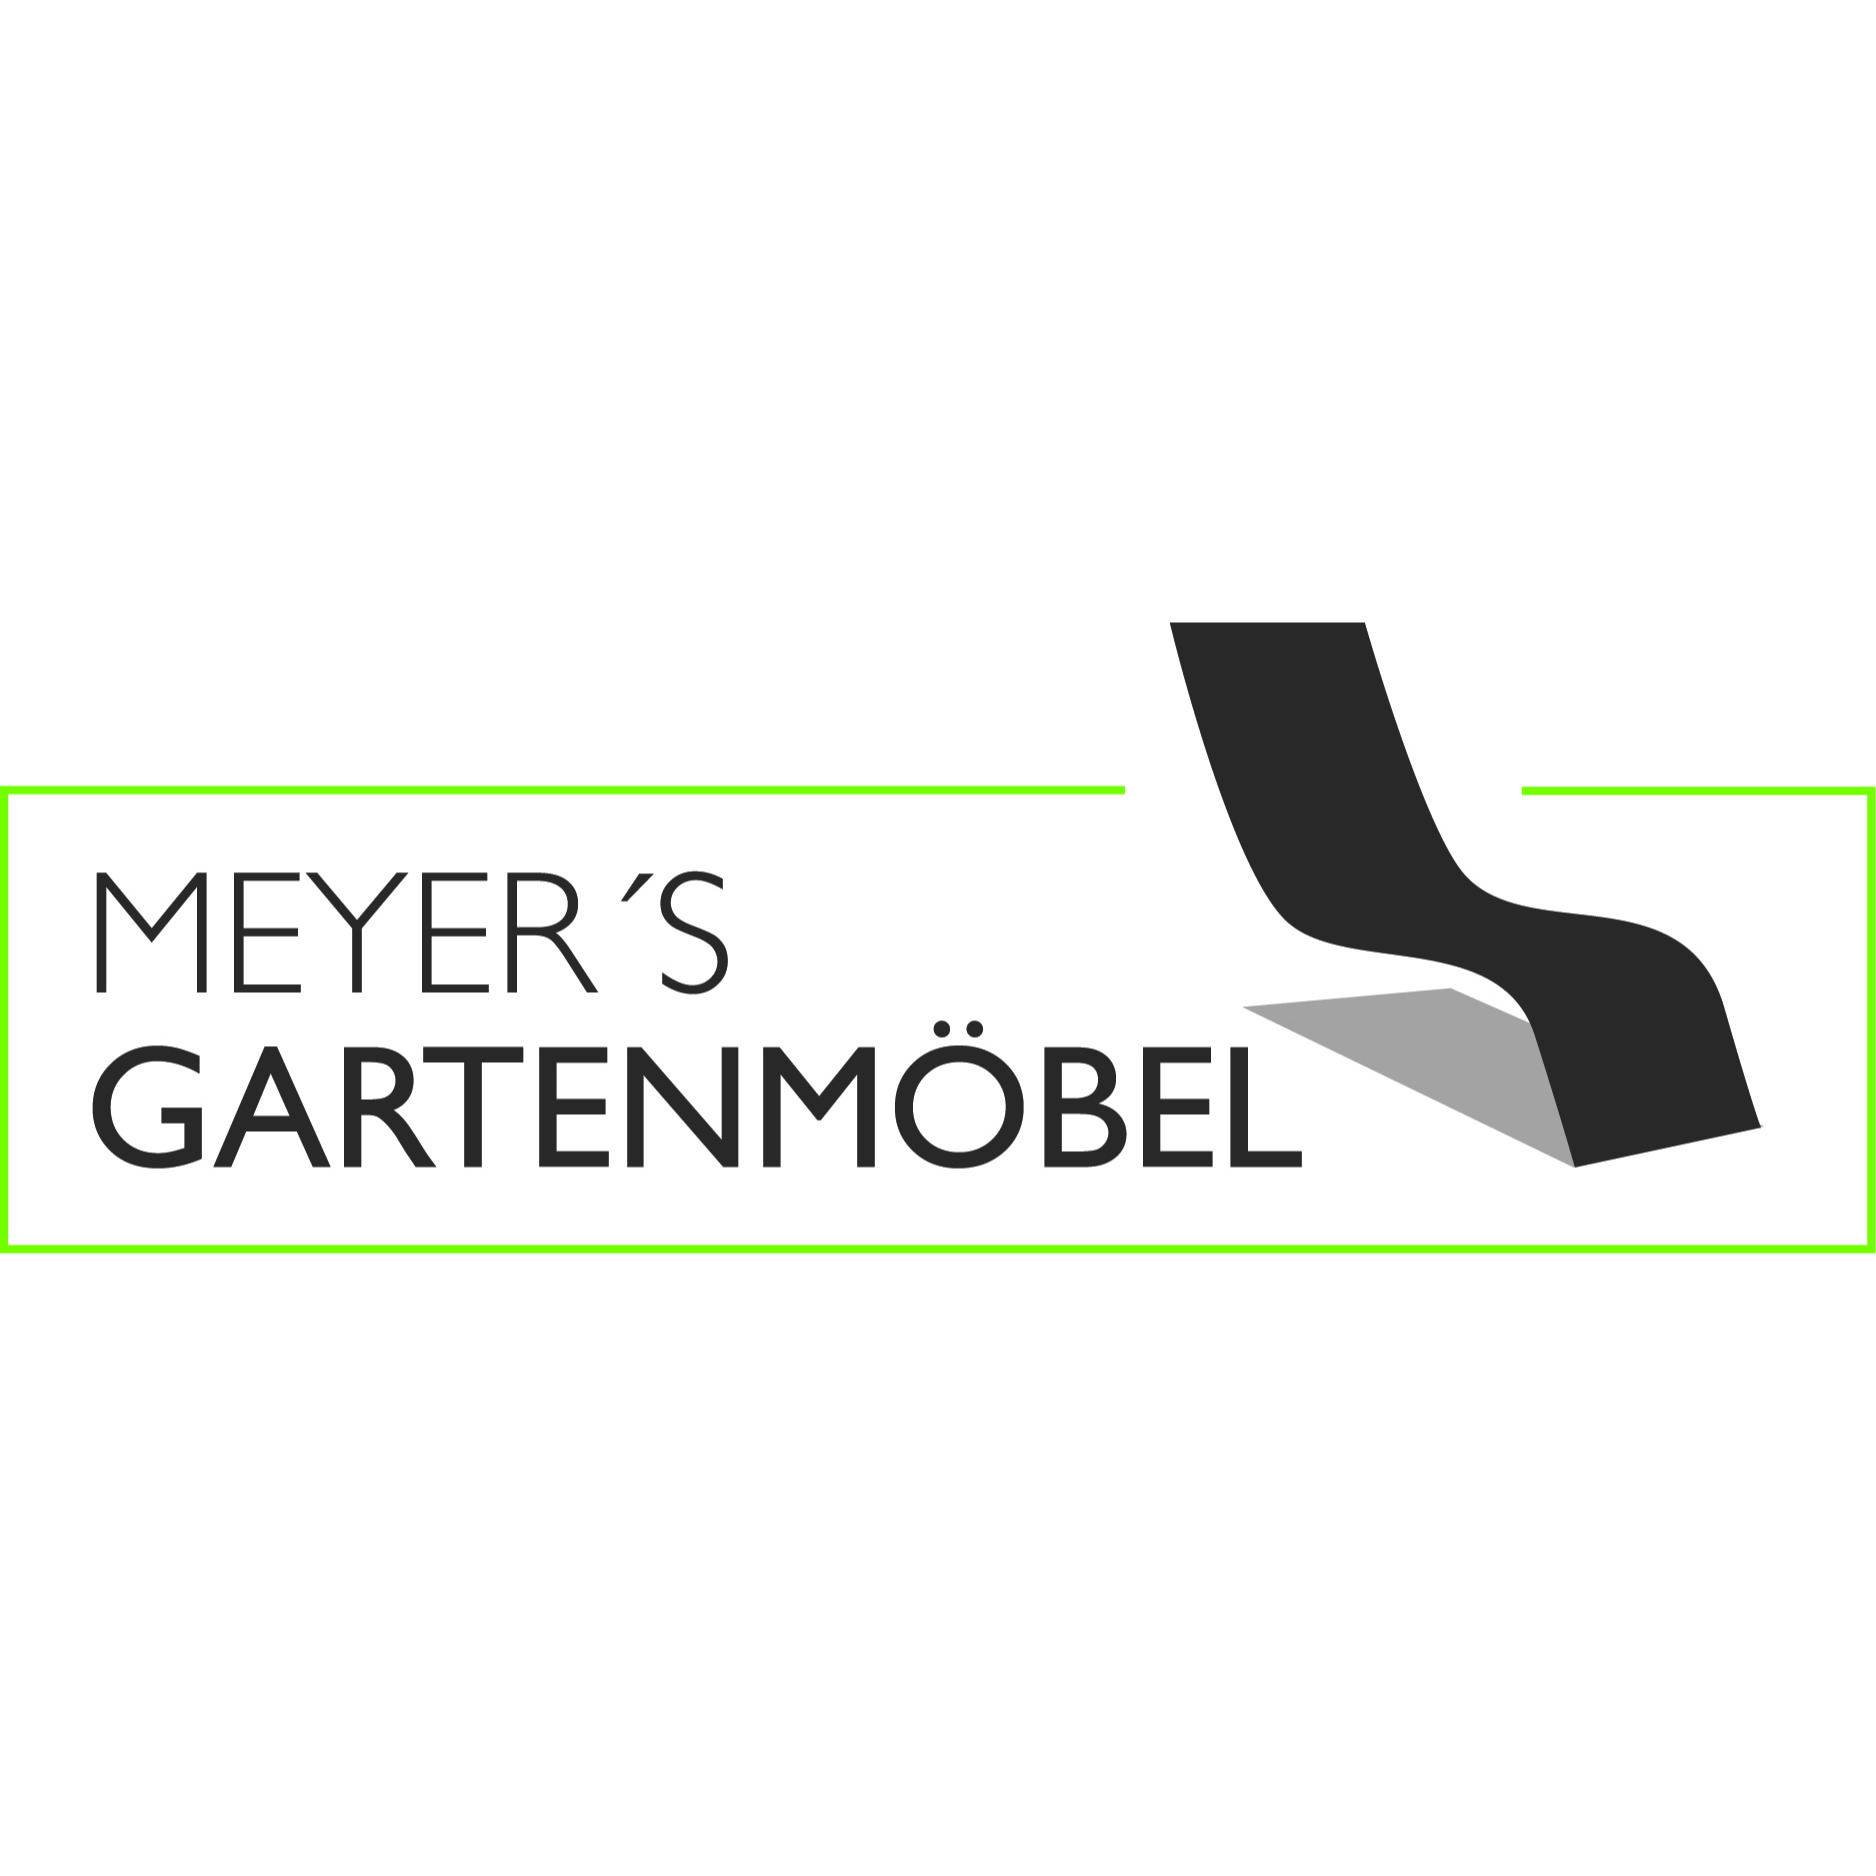 Gartenmöbel-Center Meyer GmbH & Co. KG - Outdoor Furniture Store - Münster - 0251 7478800 Germany | ShowMeLocal.com